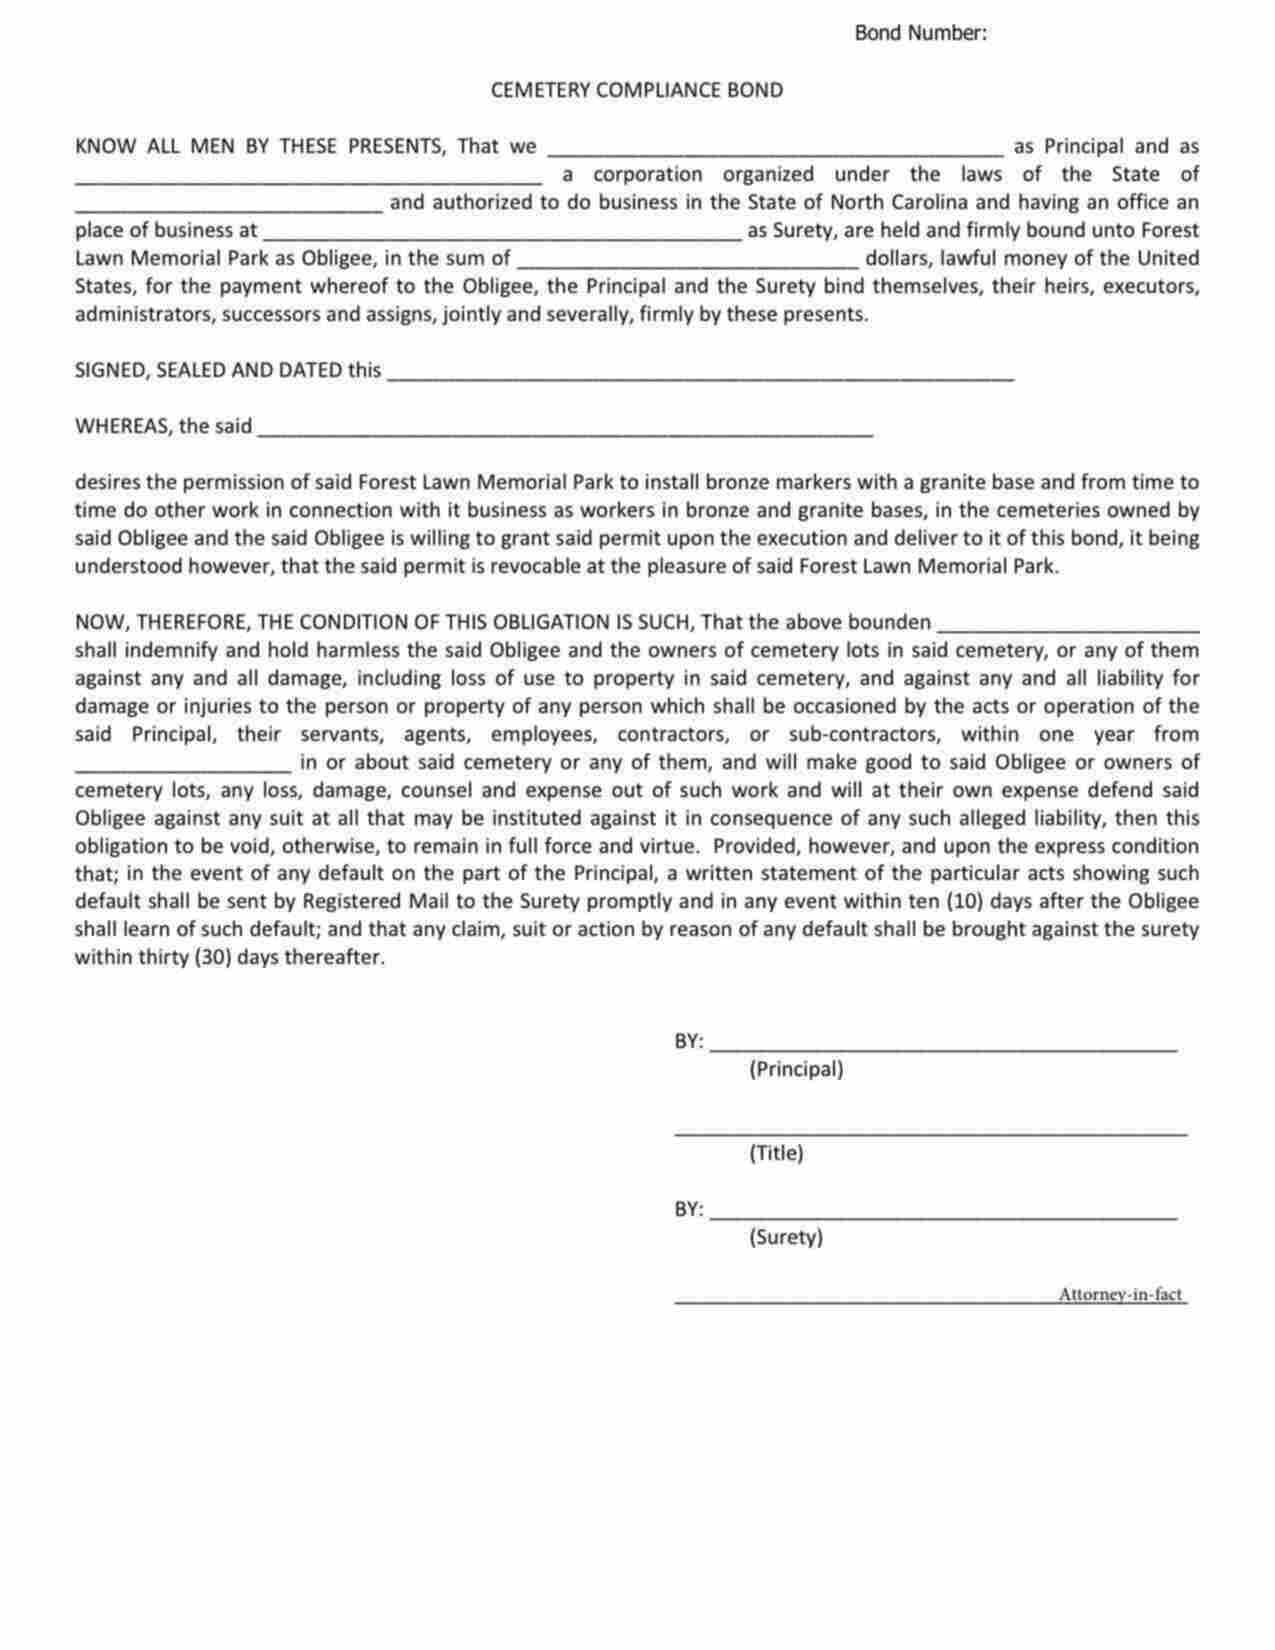 North Carolina Cemetery Compliance Bond Form